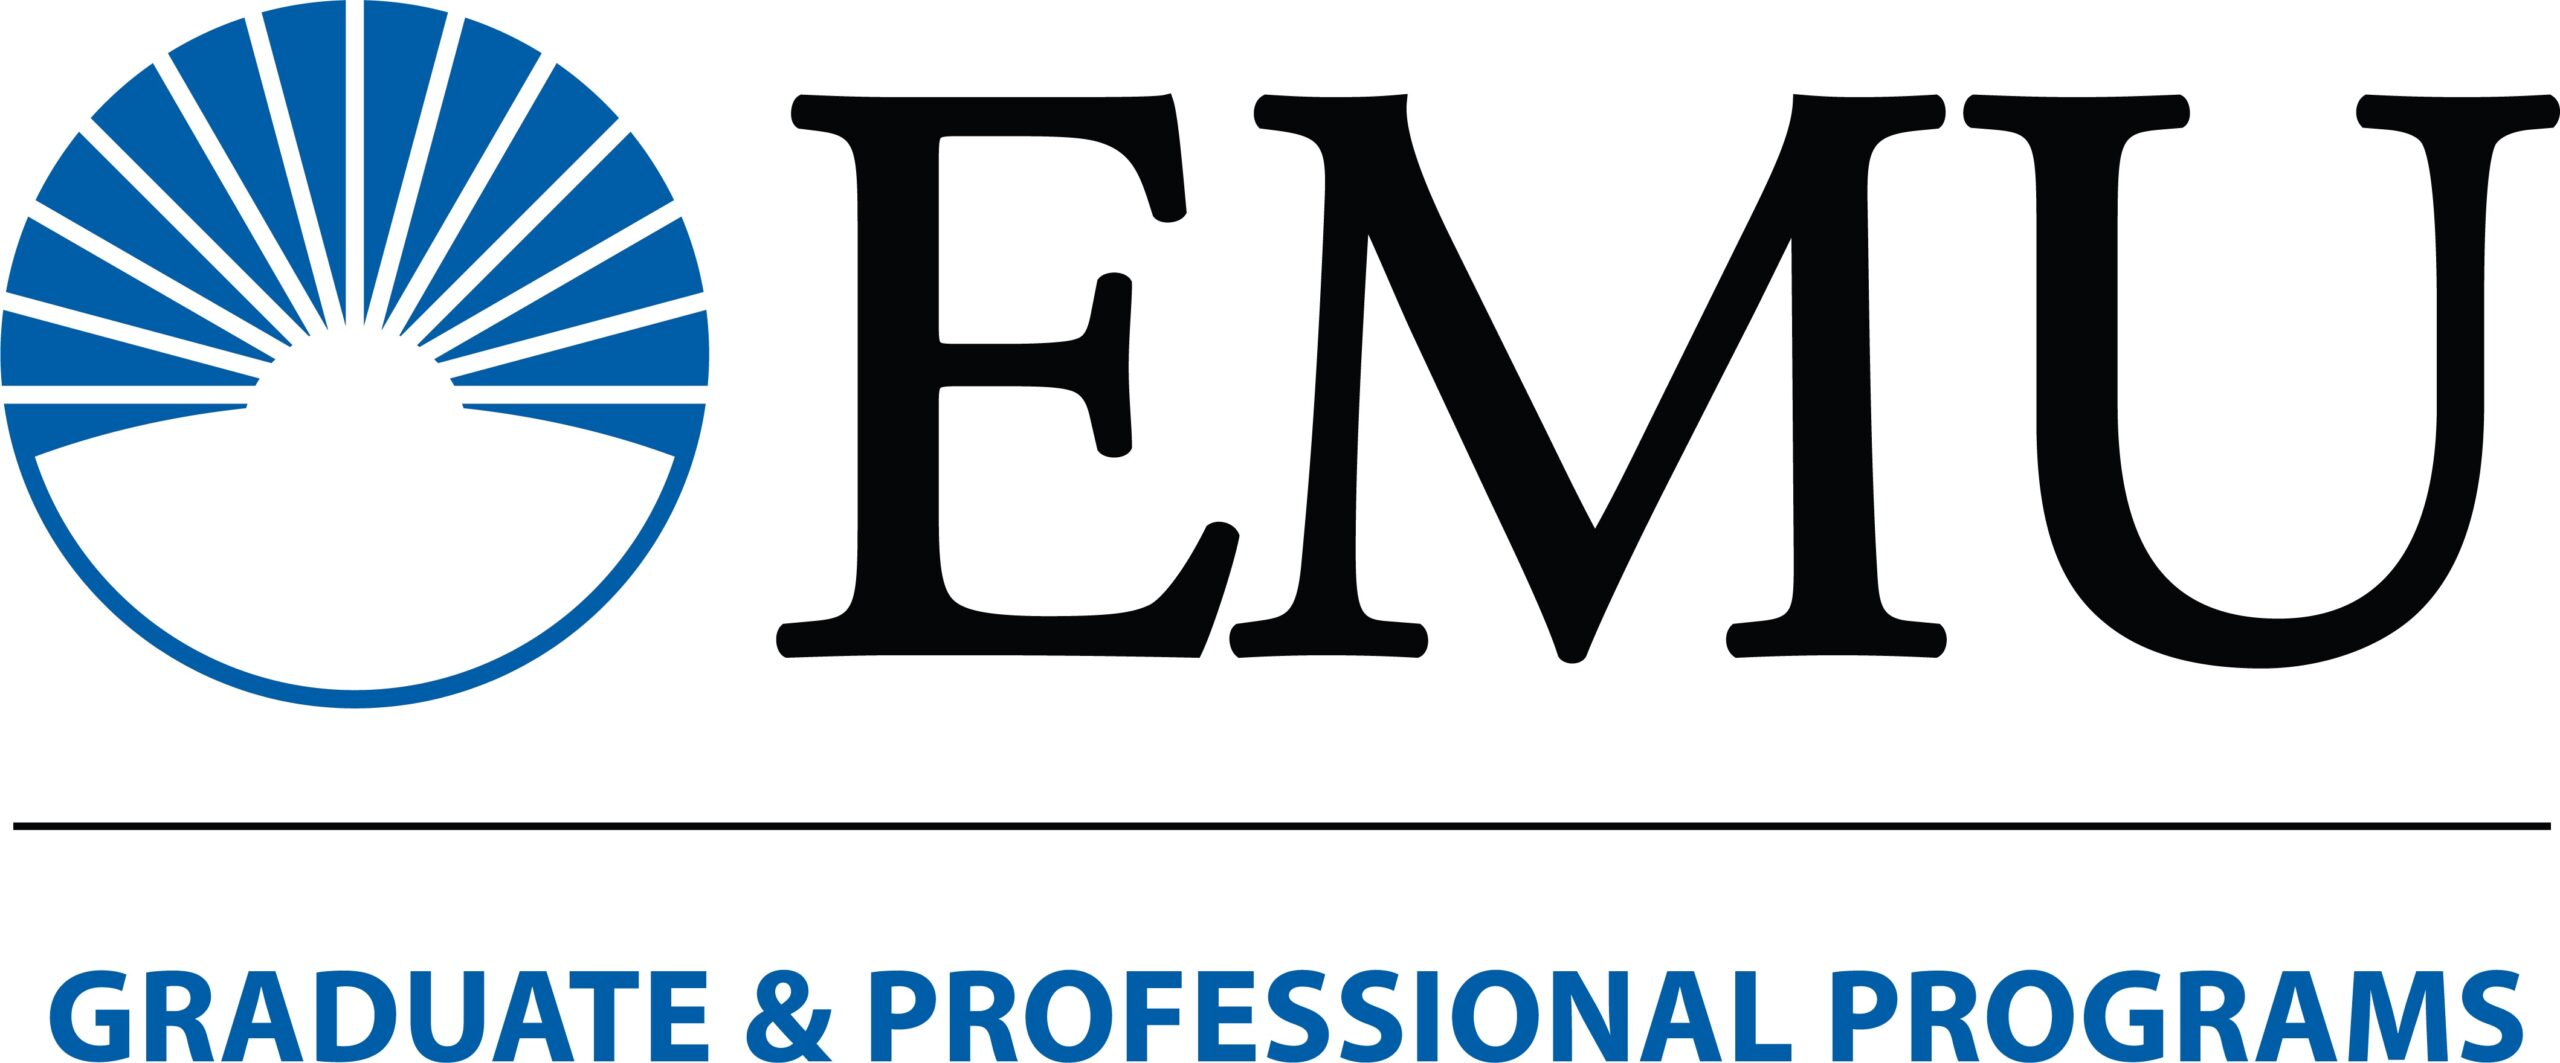 EMU GPR Logo